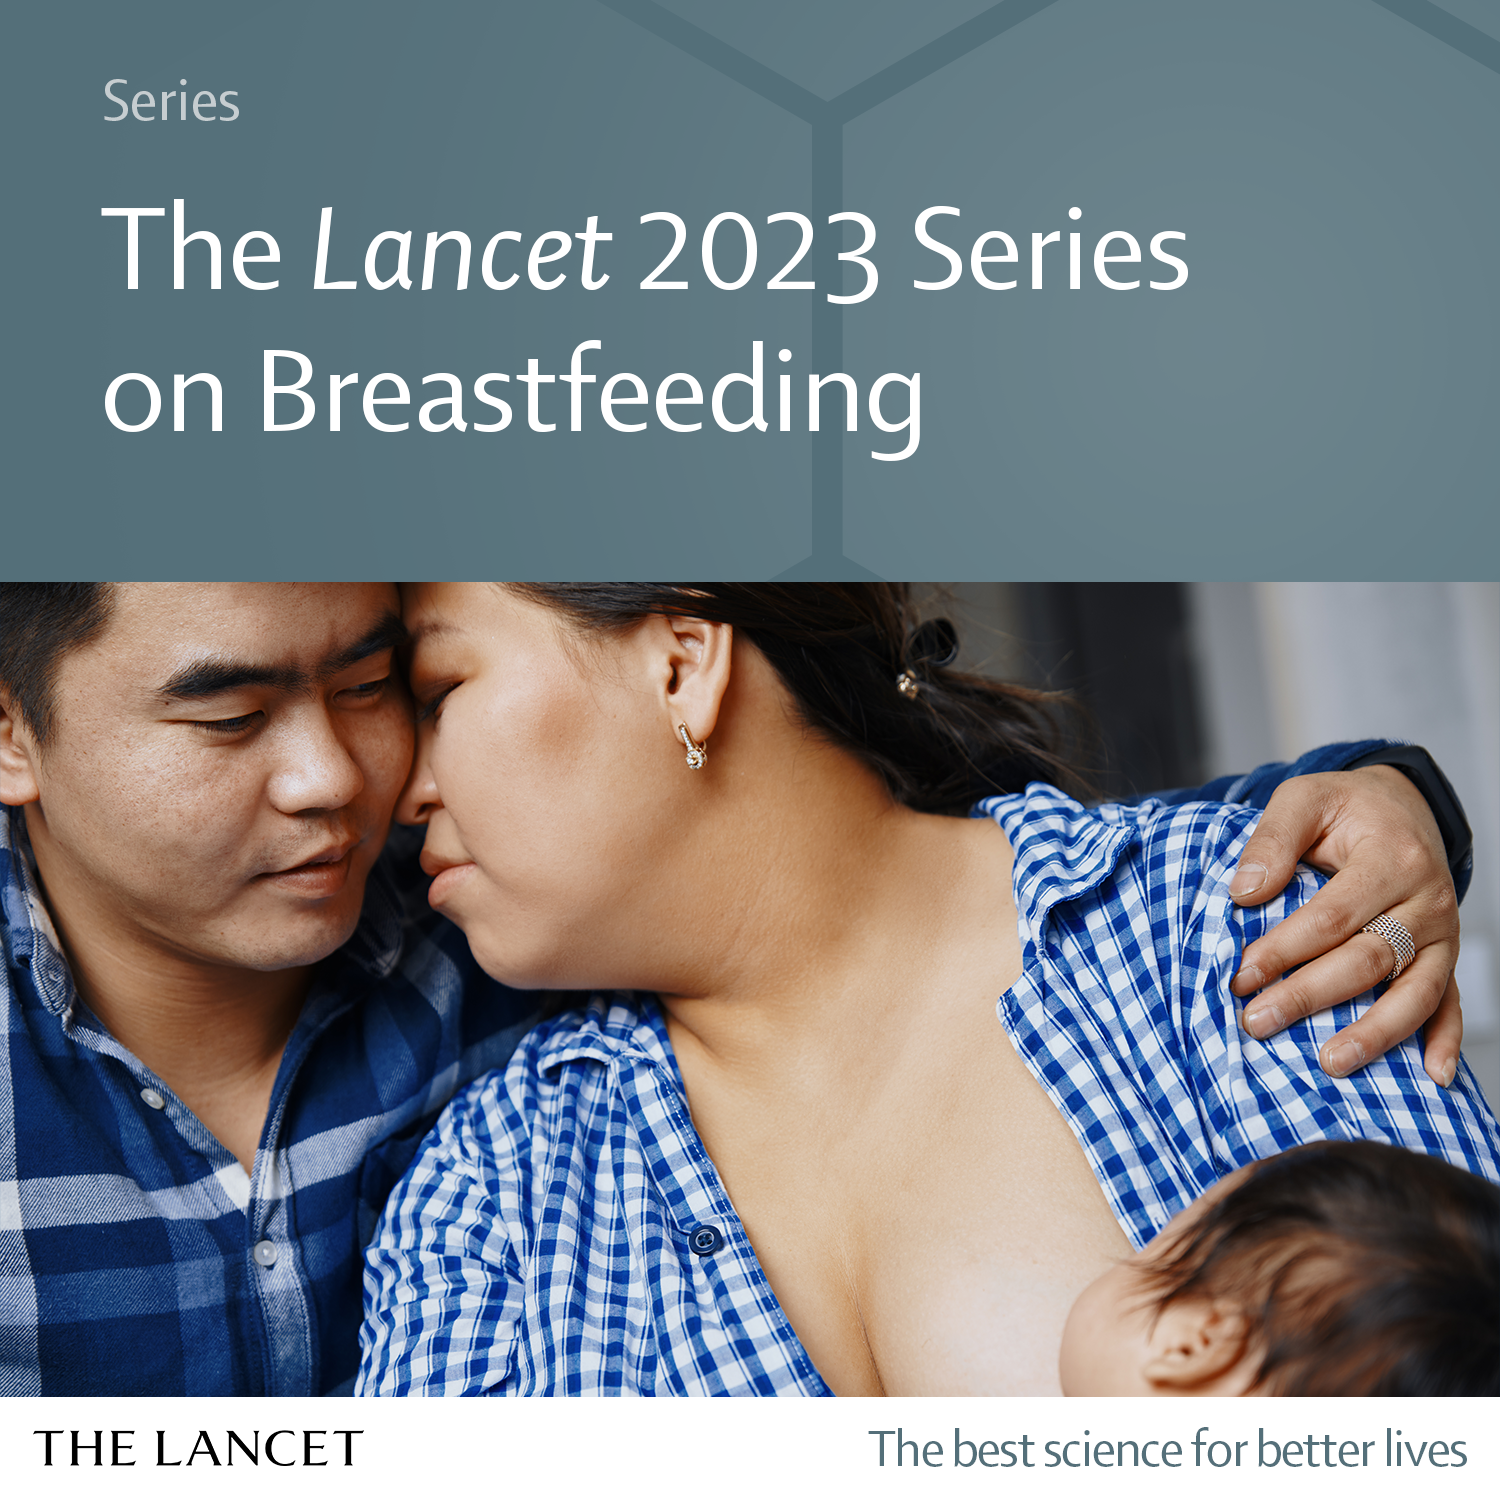 The 2023 Lancet Series on Breastfeeding